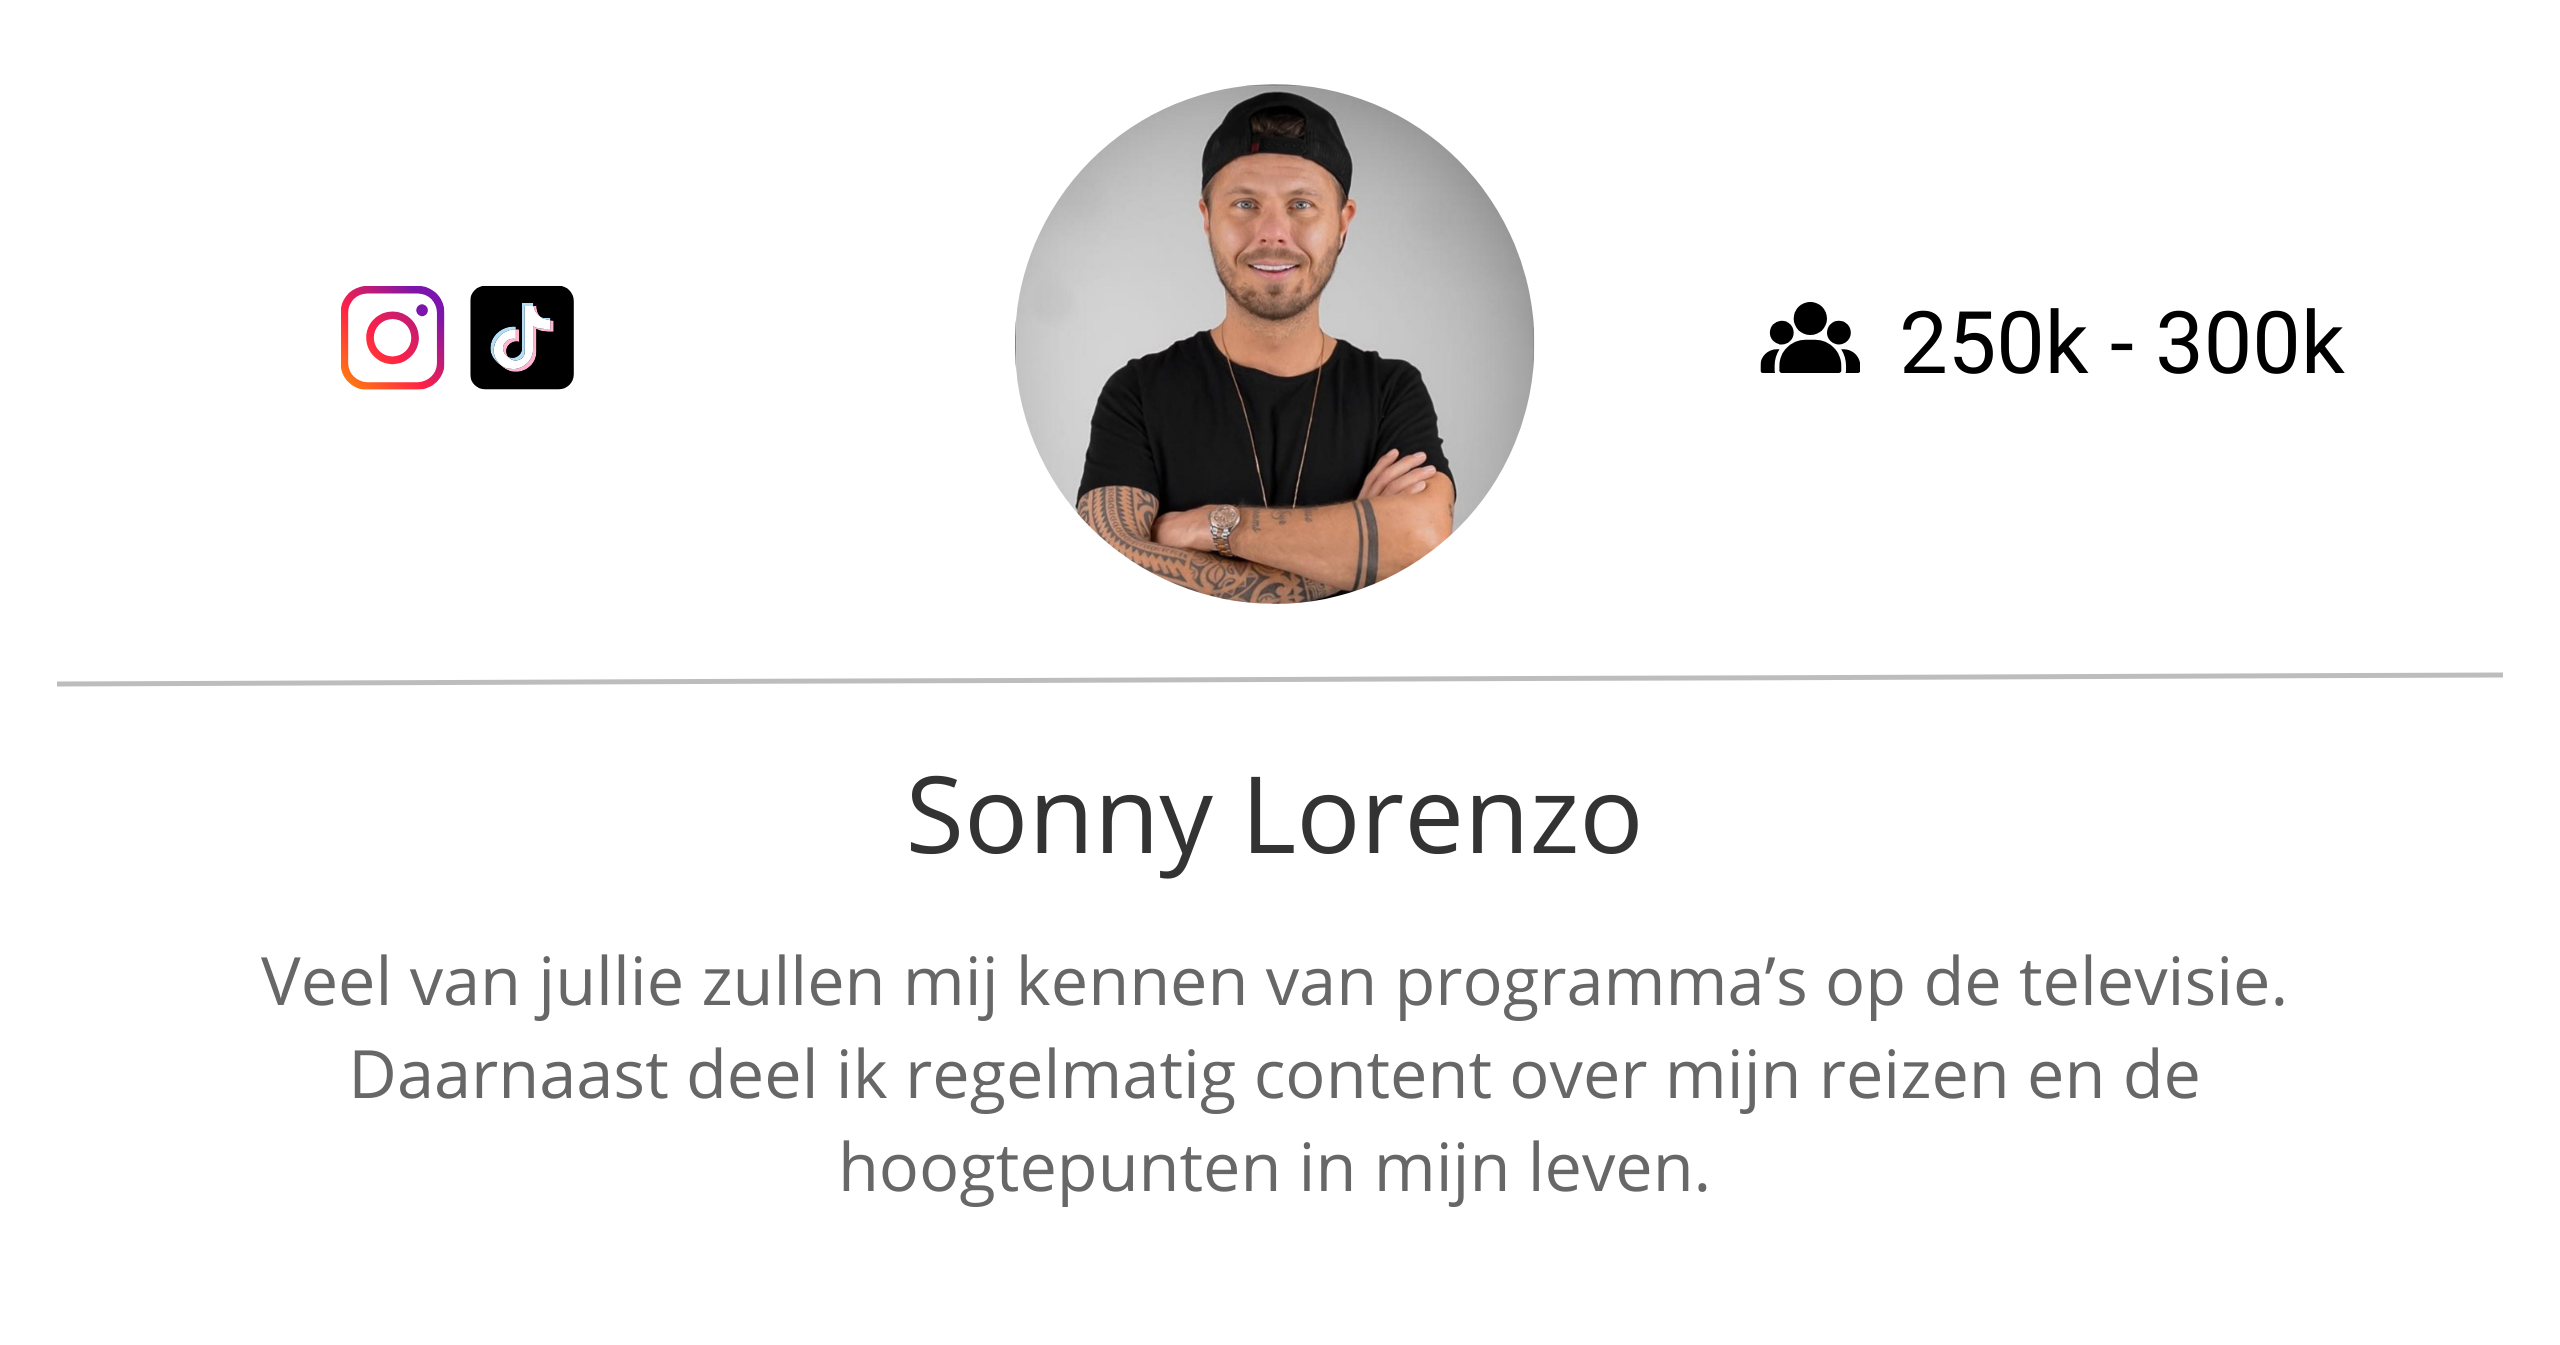 Sonny Lorenzo